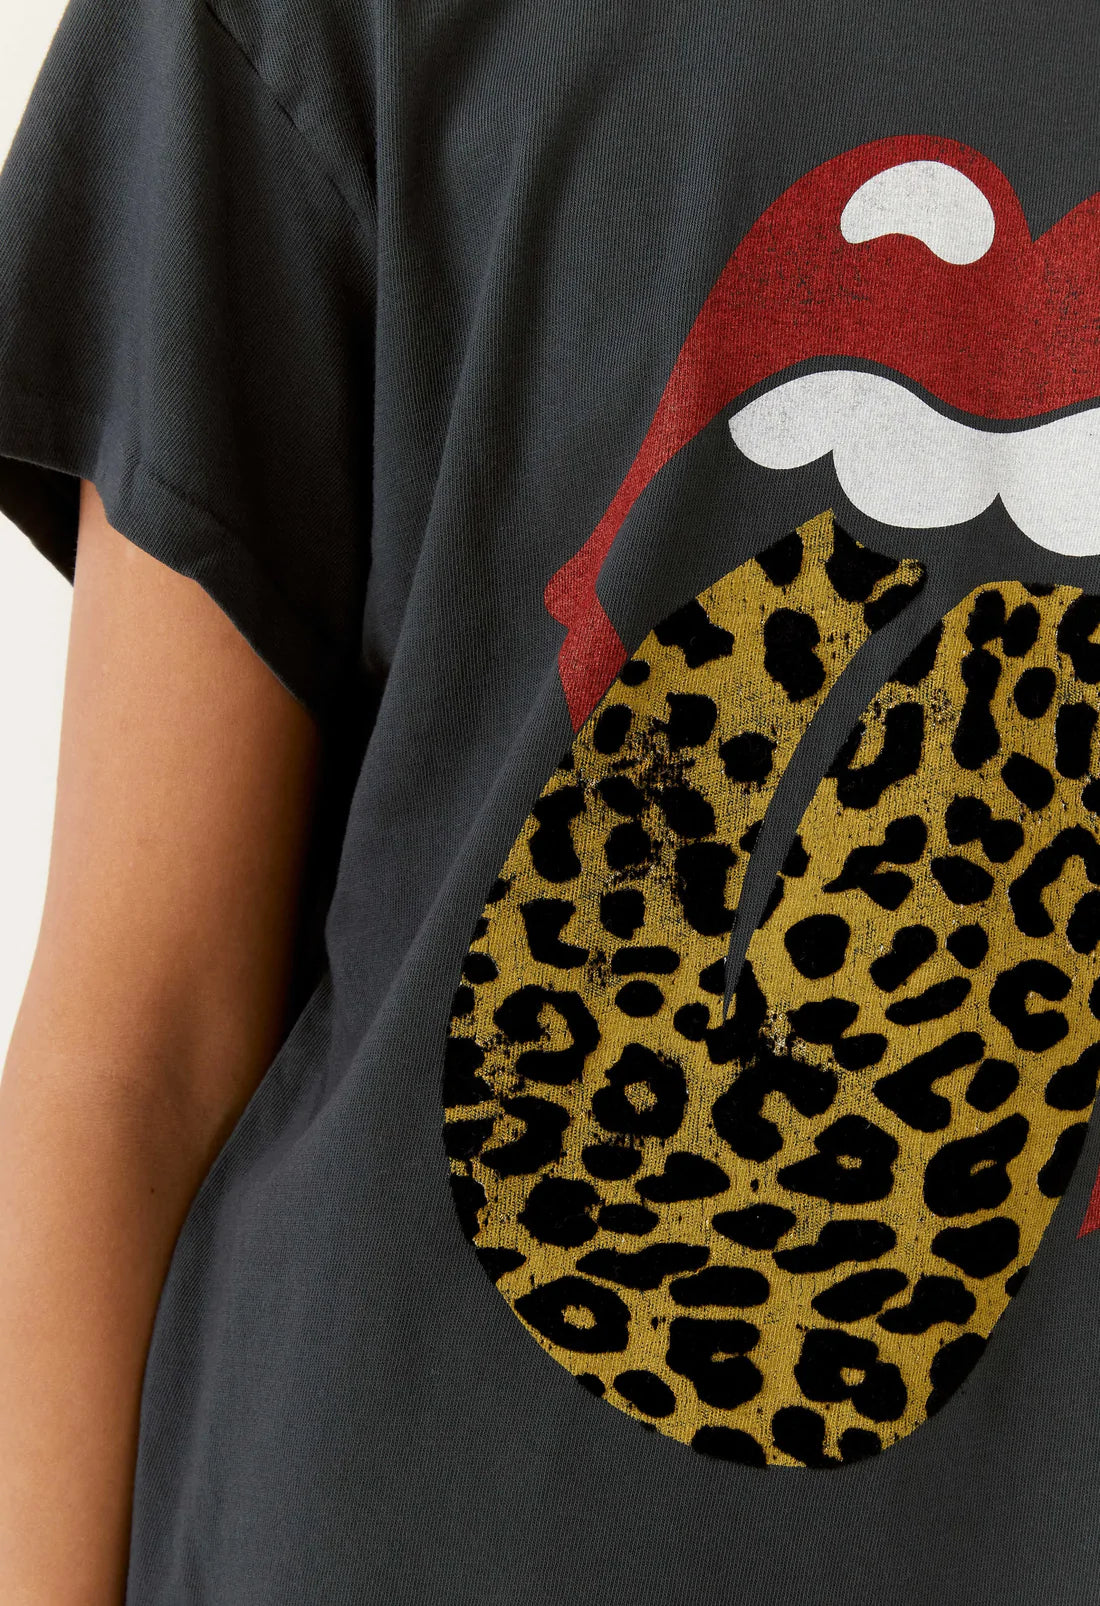 Rolling Stones Leopard Tongue Tour Tee